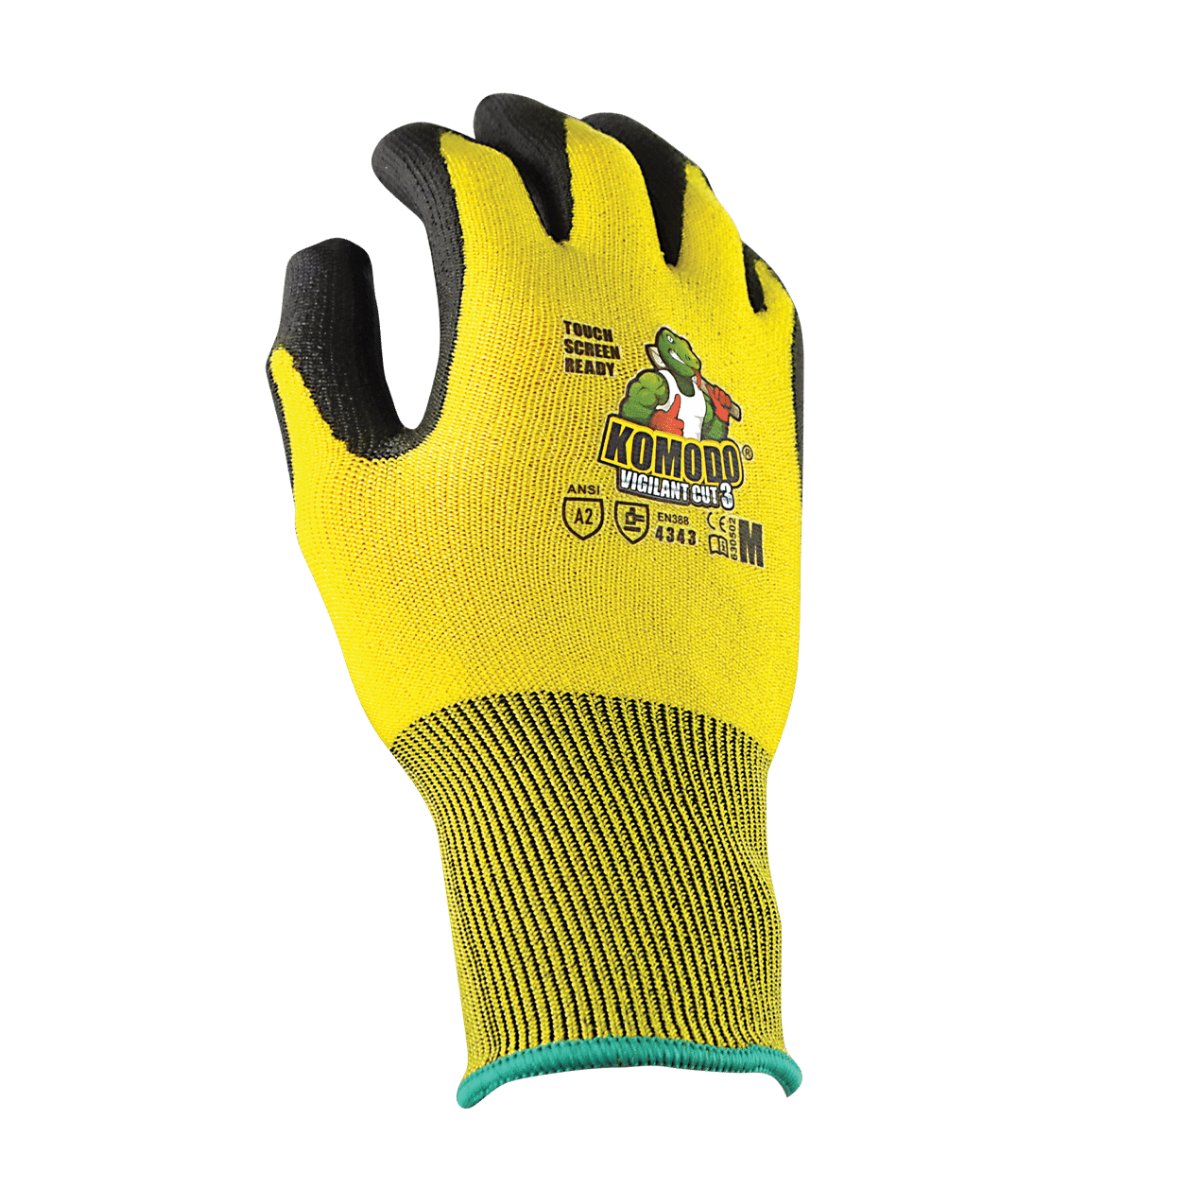 TGC KOMODO® Vigilant® Cut 3 Gloves 63050 (Pack of 12)